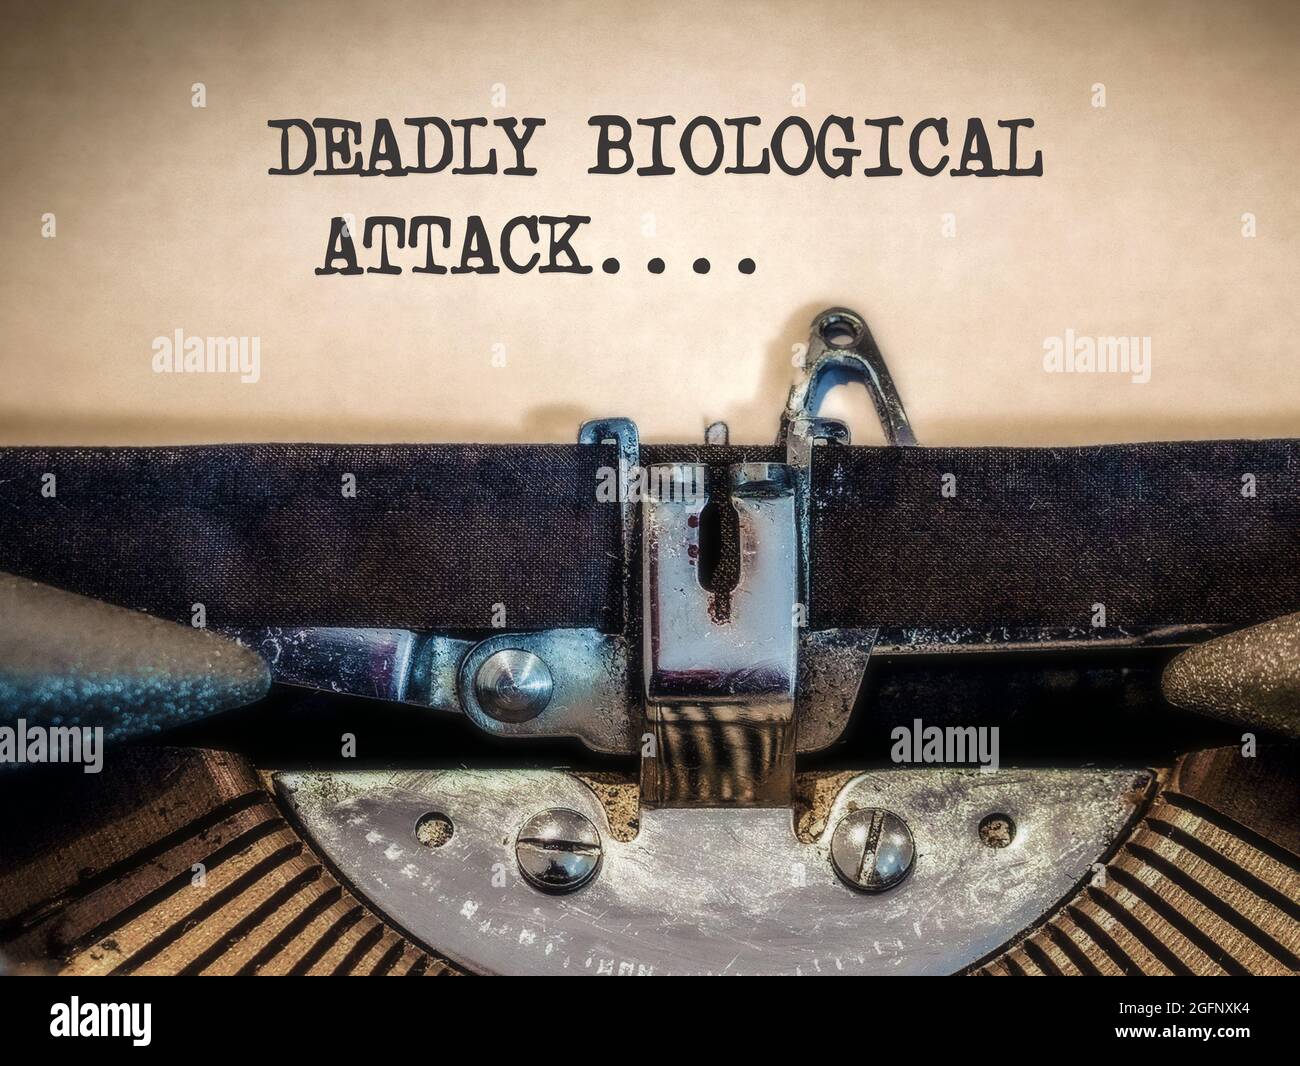 Ataque biológico mortal, Typewriter, Story, News Foto de stock